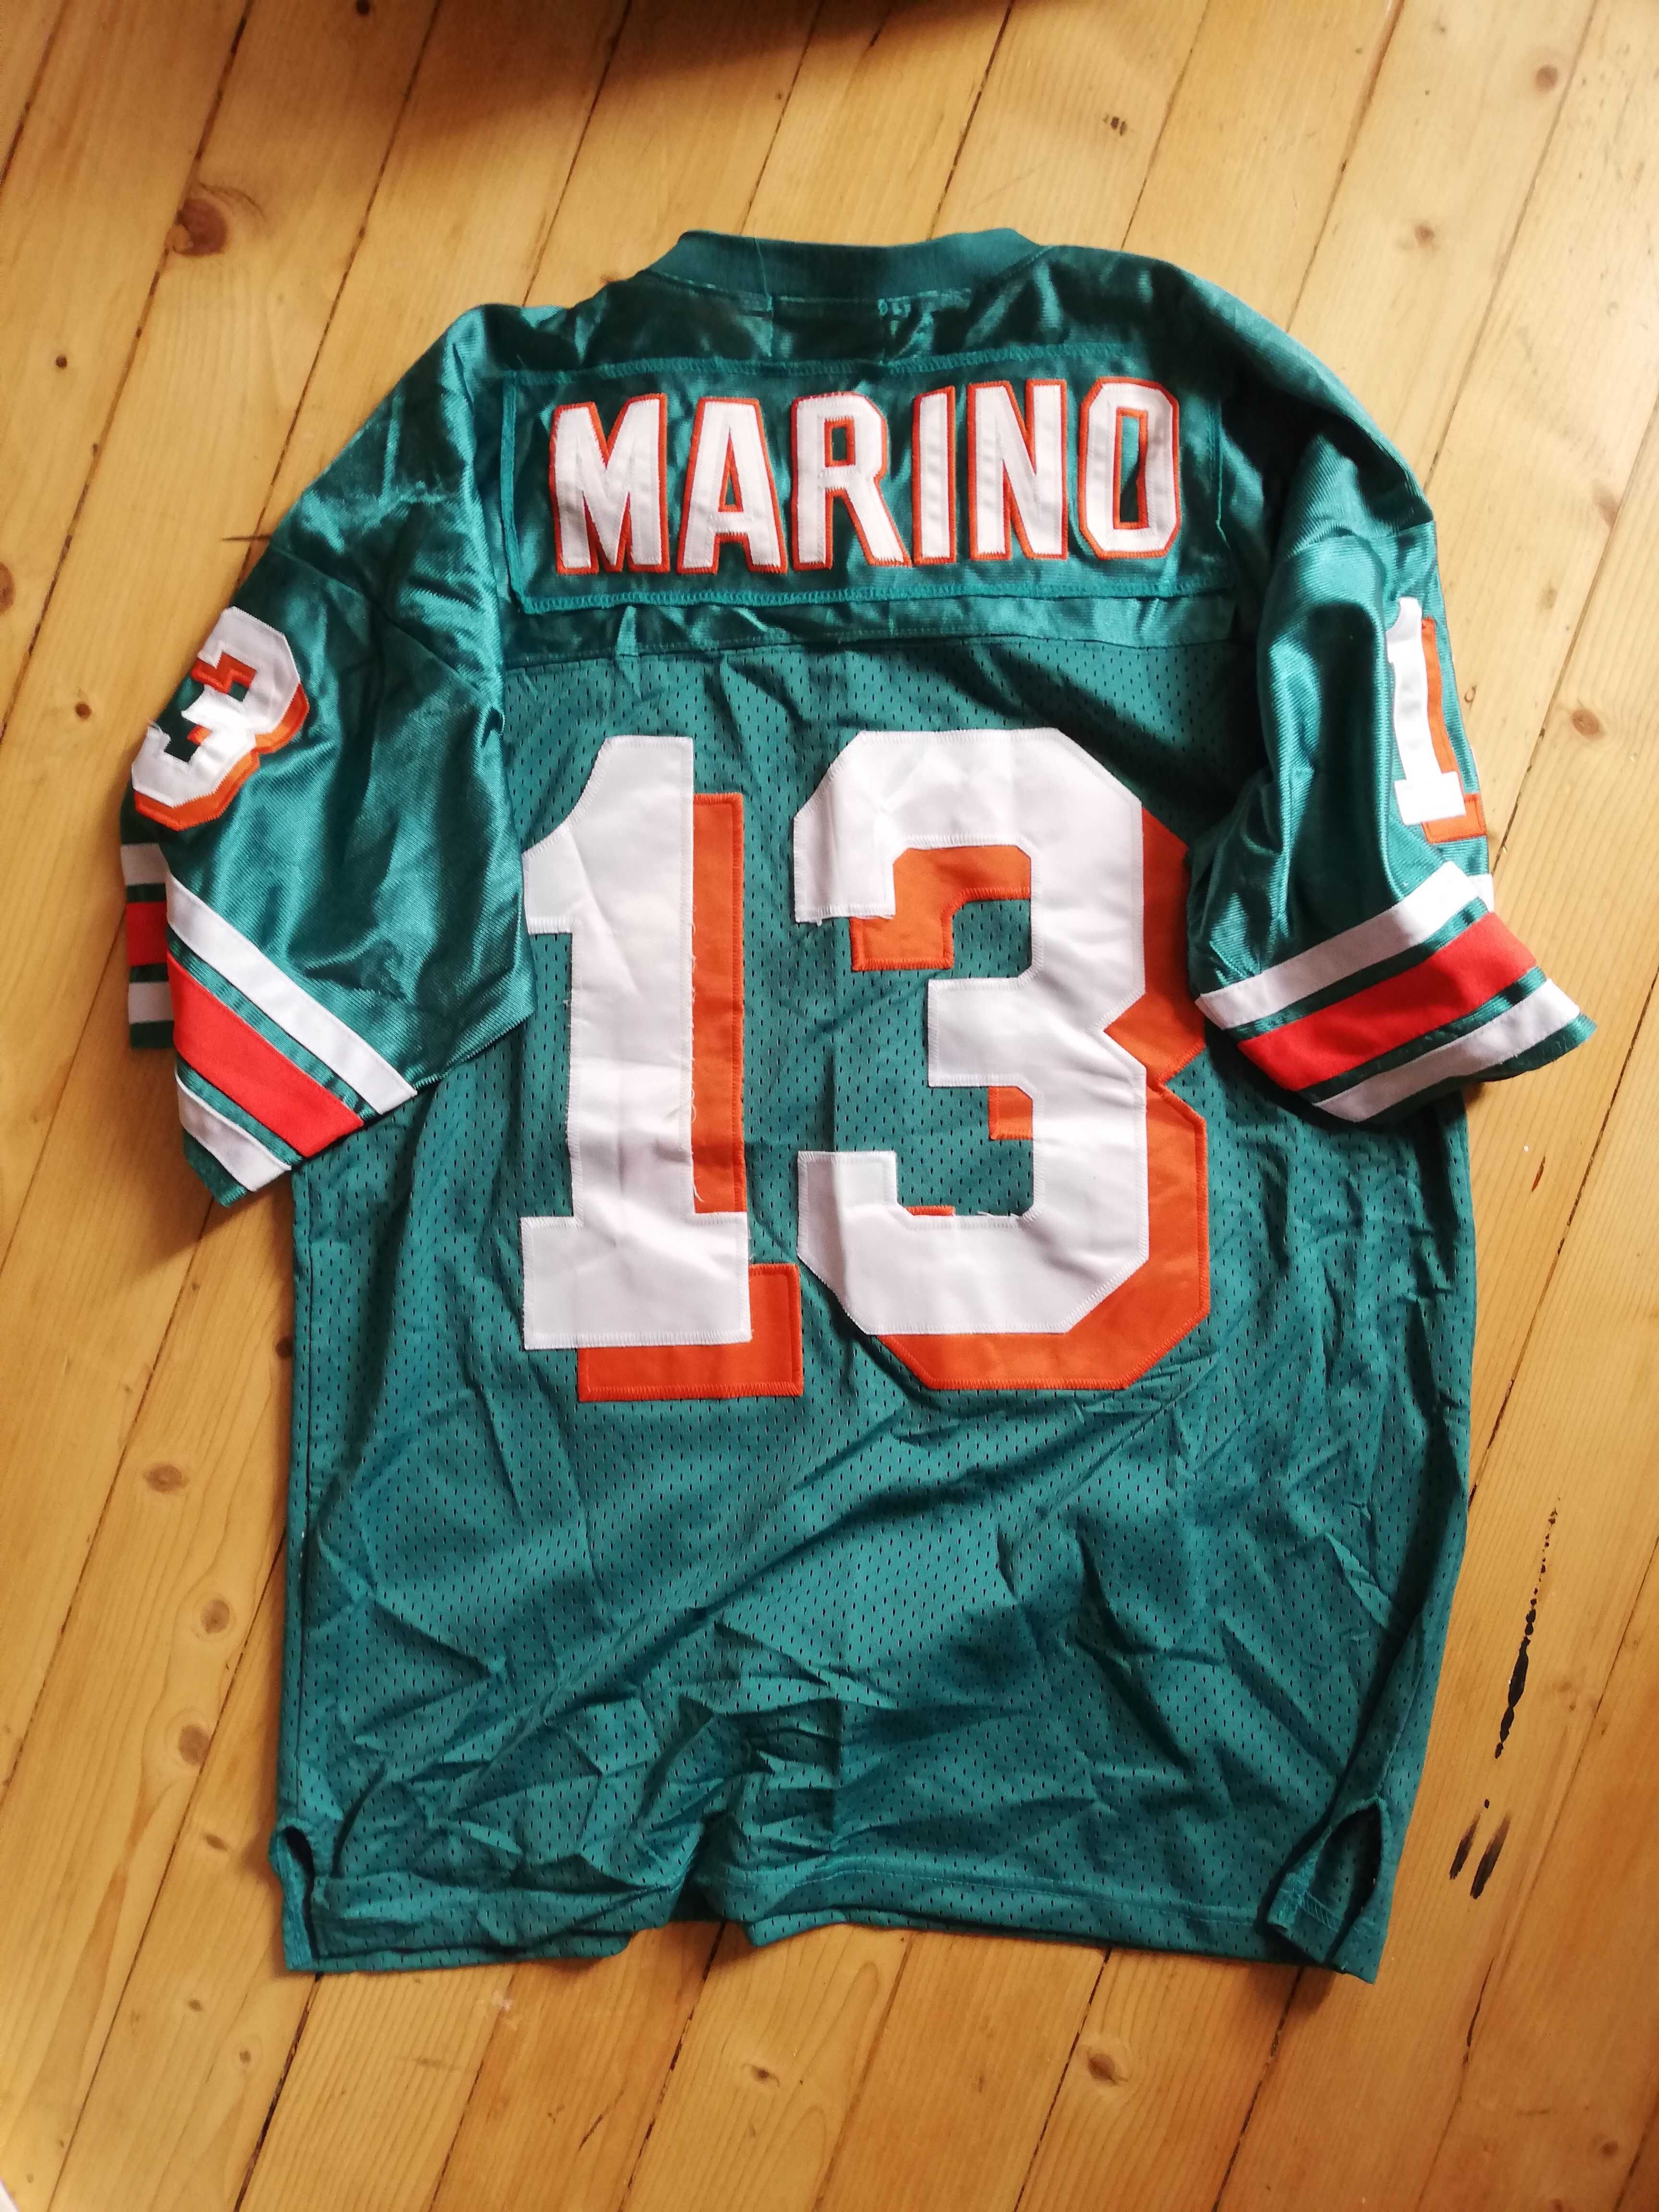 Miami Dolphins #13 Dan Marino Jersey - Rare Limited Edition 2004